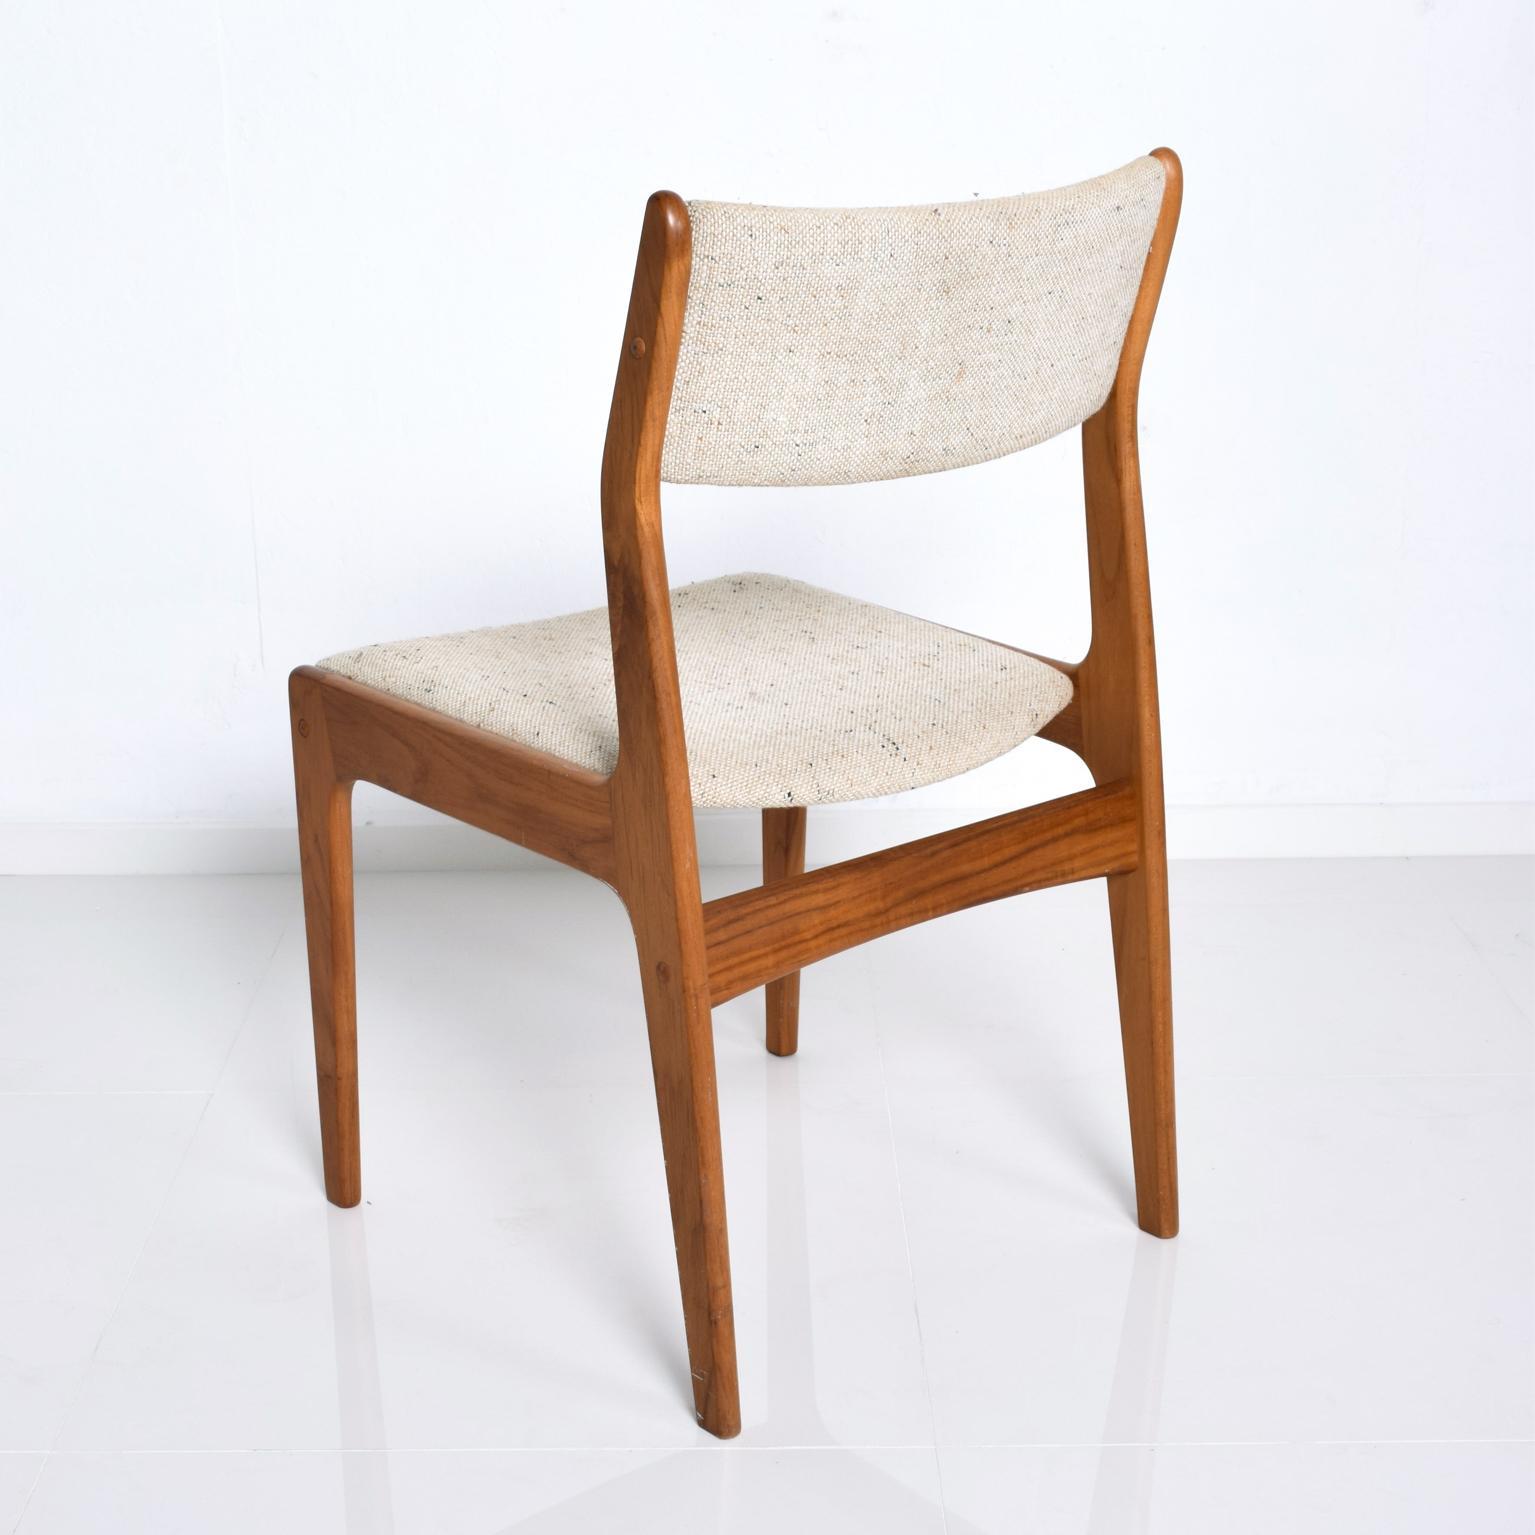 Late 20th Century Midcentury Danish Modern Benny Linden Teak Dining Chairs, Set of 4